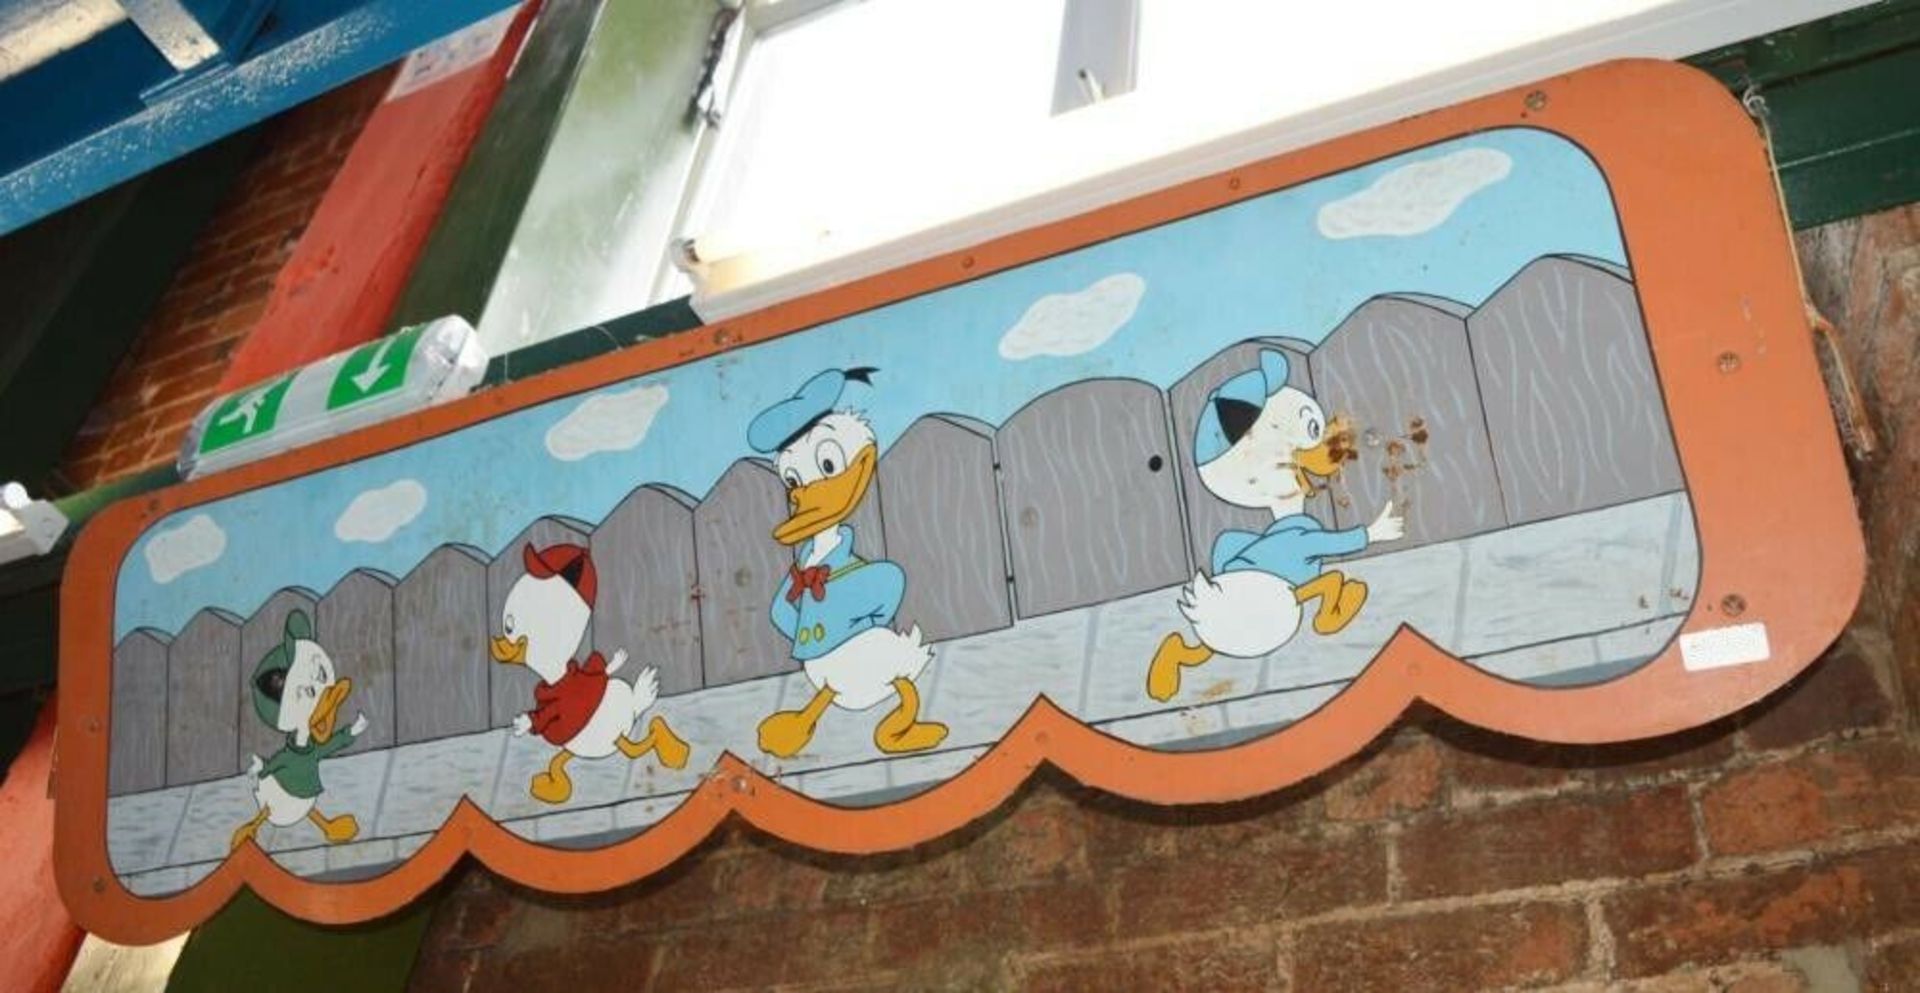 7 x Vintage Fairground Ride Fence Panels - Hand Painted Disneyland Artwork - With Braced Backs and - Image 7 of 10